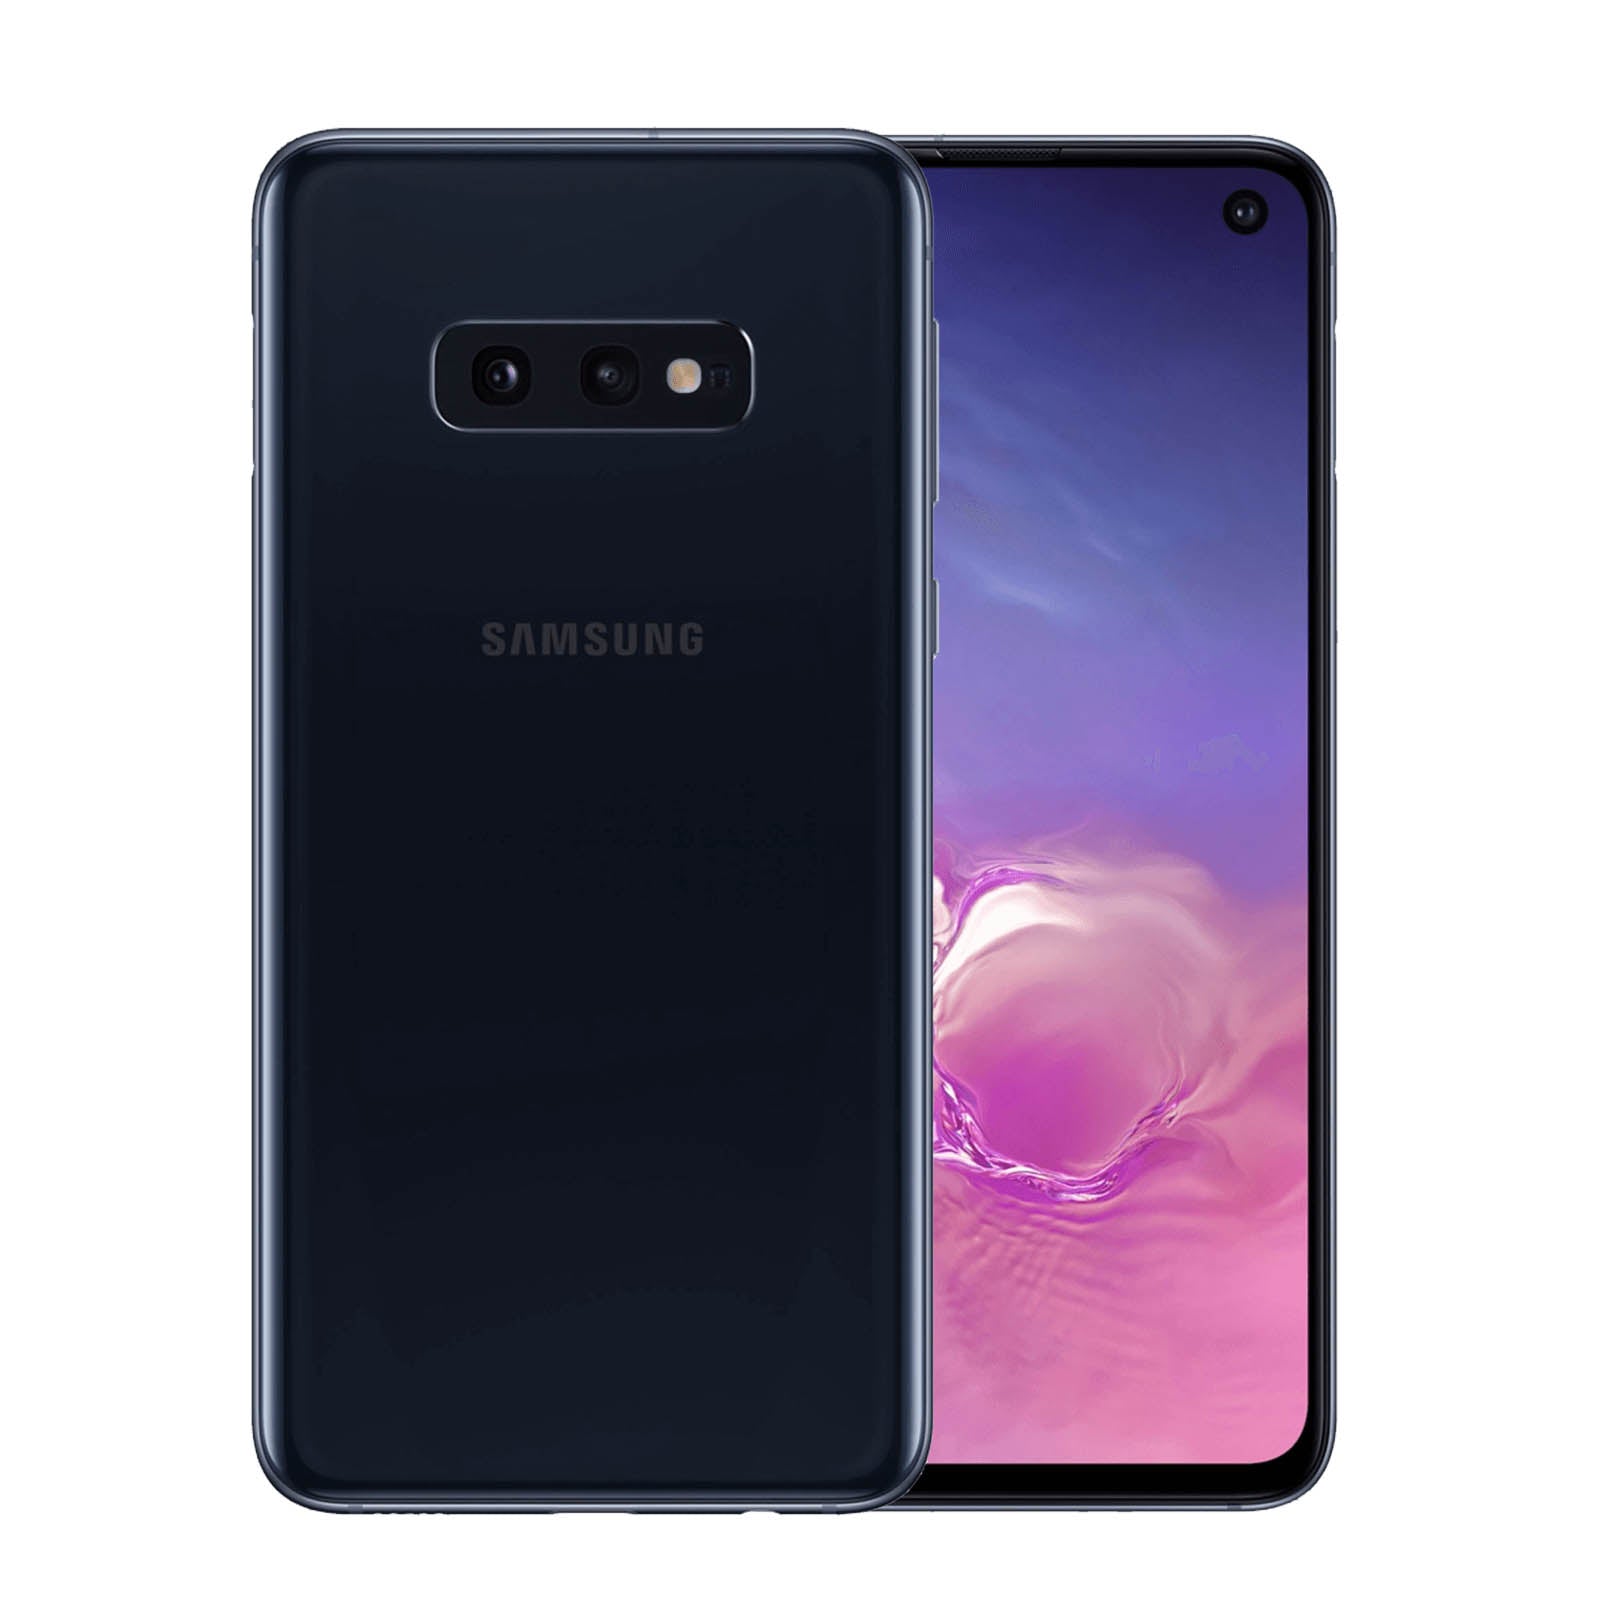 Samsung Galaxy S10E 128GB Prism Black Good - Unlocked